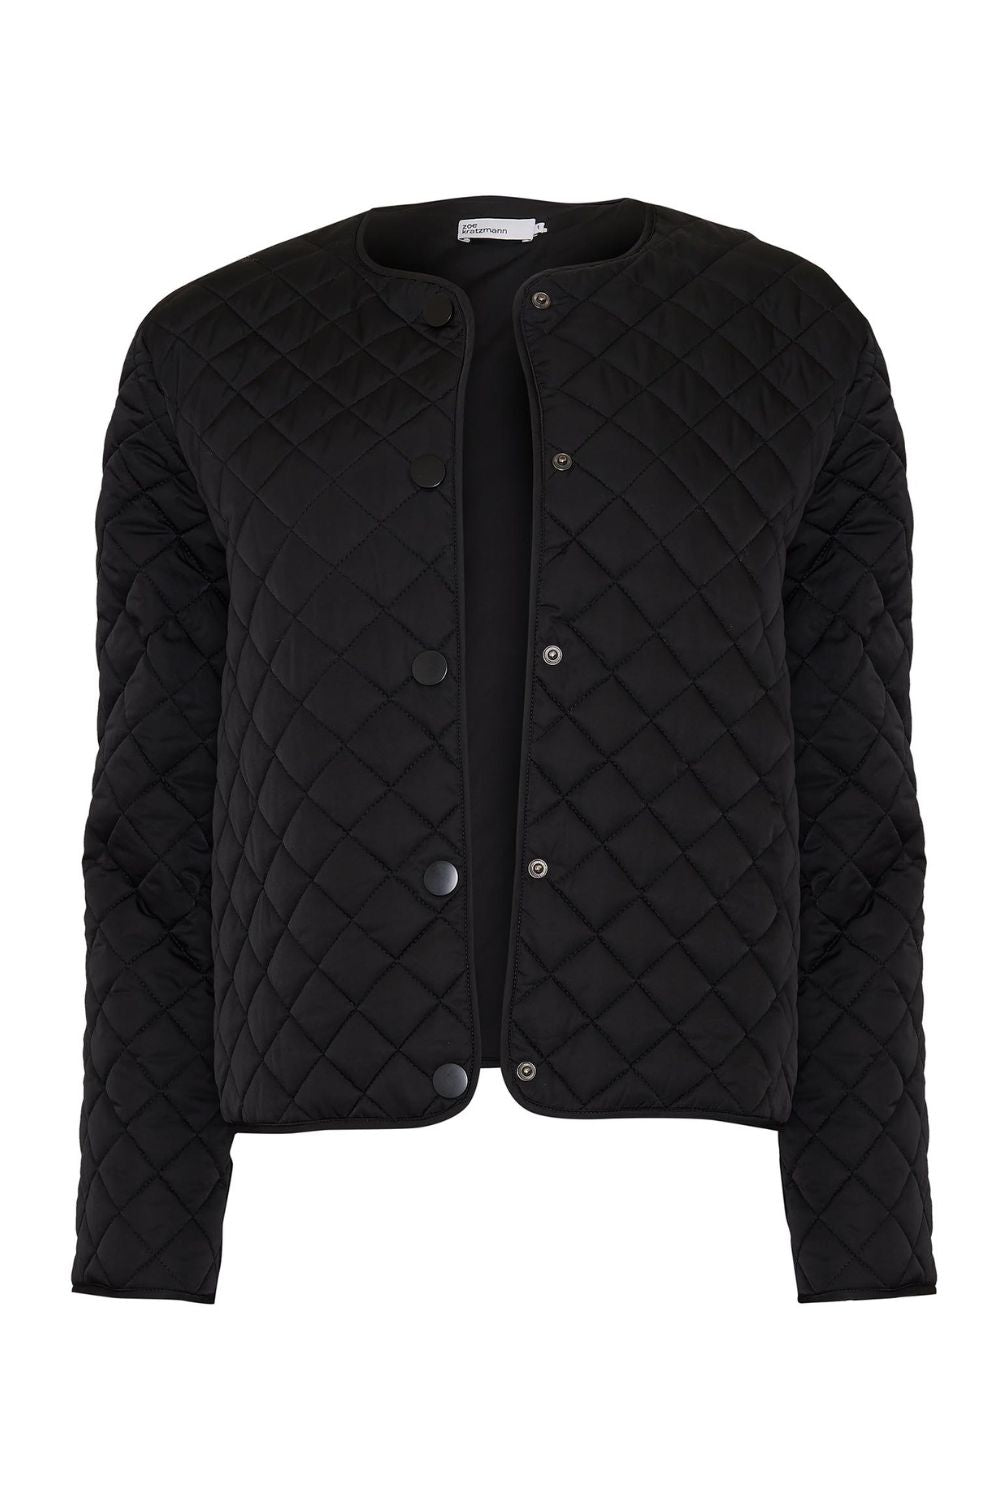 sear jacket - black